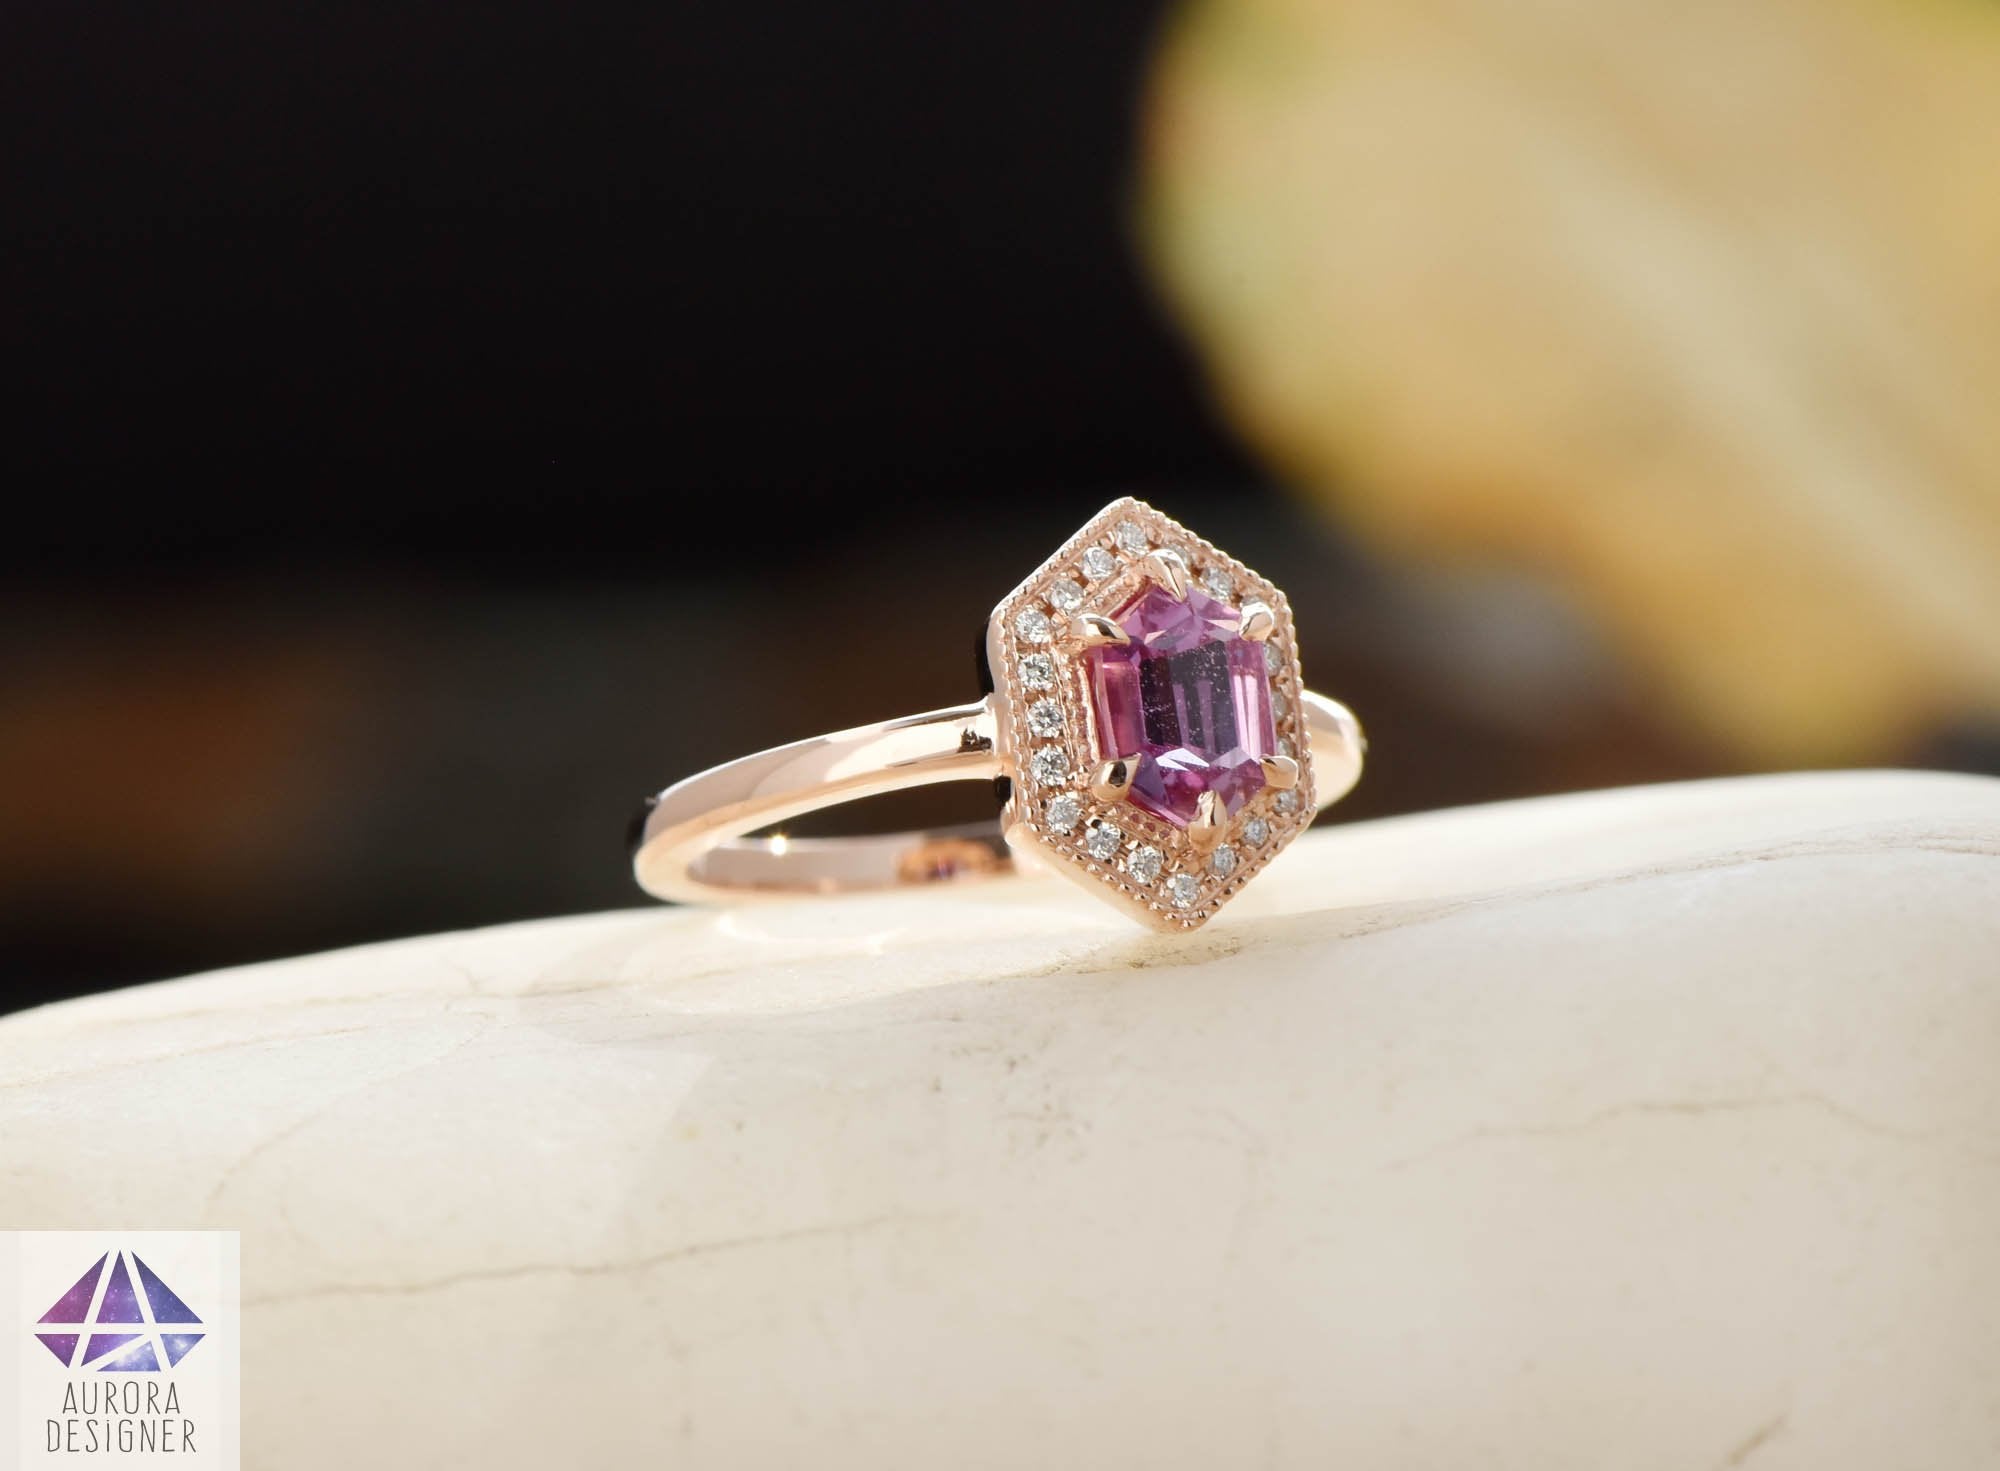 Pink Sapphire Diamond Halo Pendant Necklace 14K Rose Gold